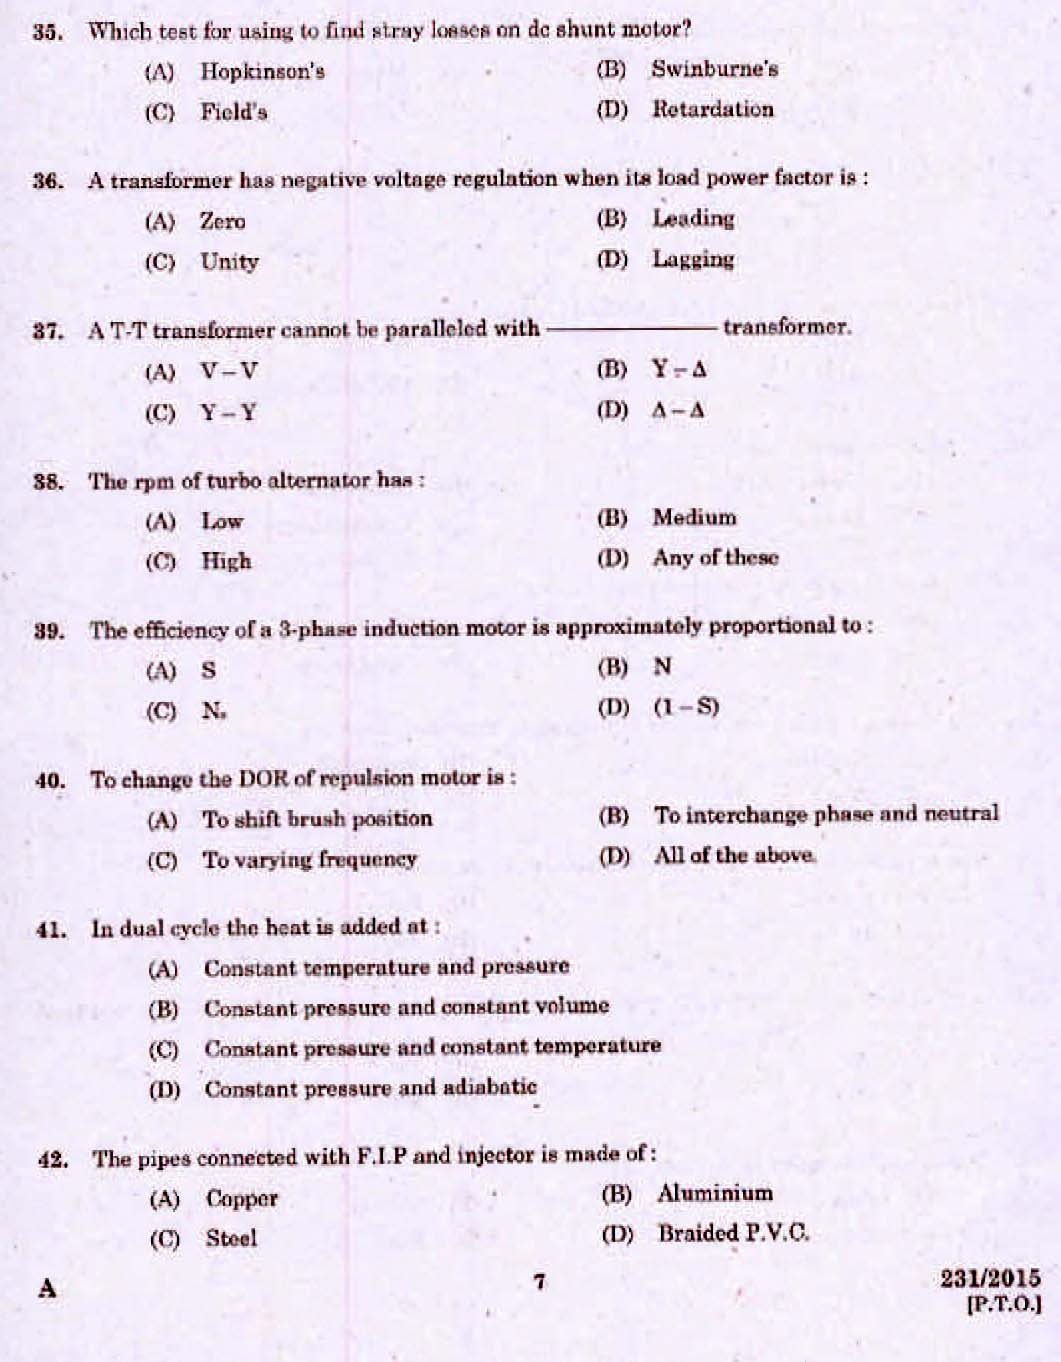 Kerala PSC Electrician Exam 2015 Question Paper Code 2312015 5